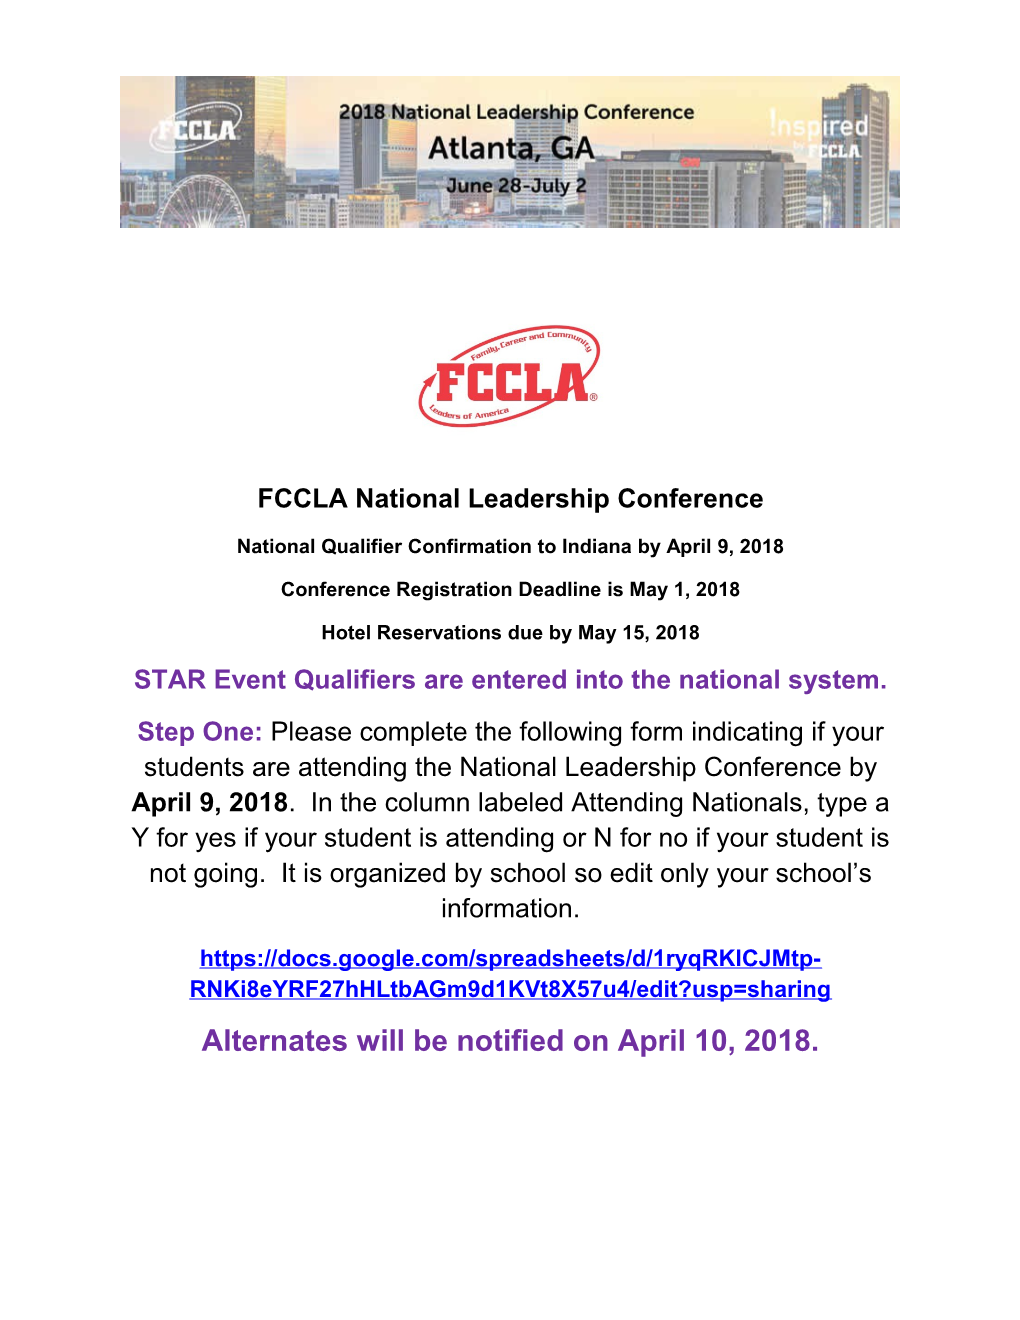 FCCLA National Leadership Conference